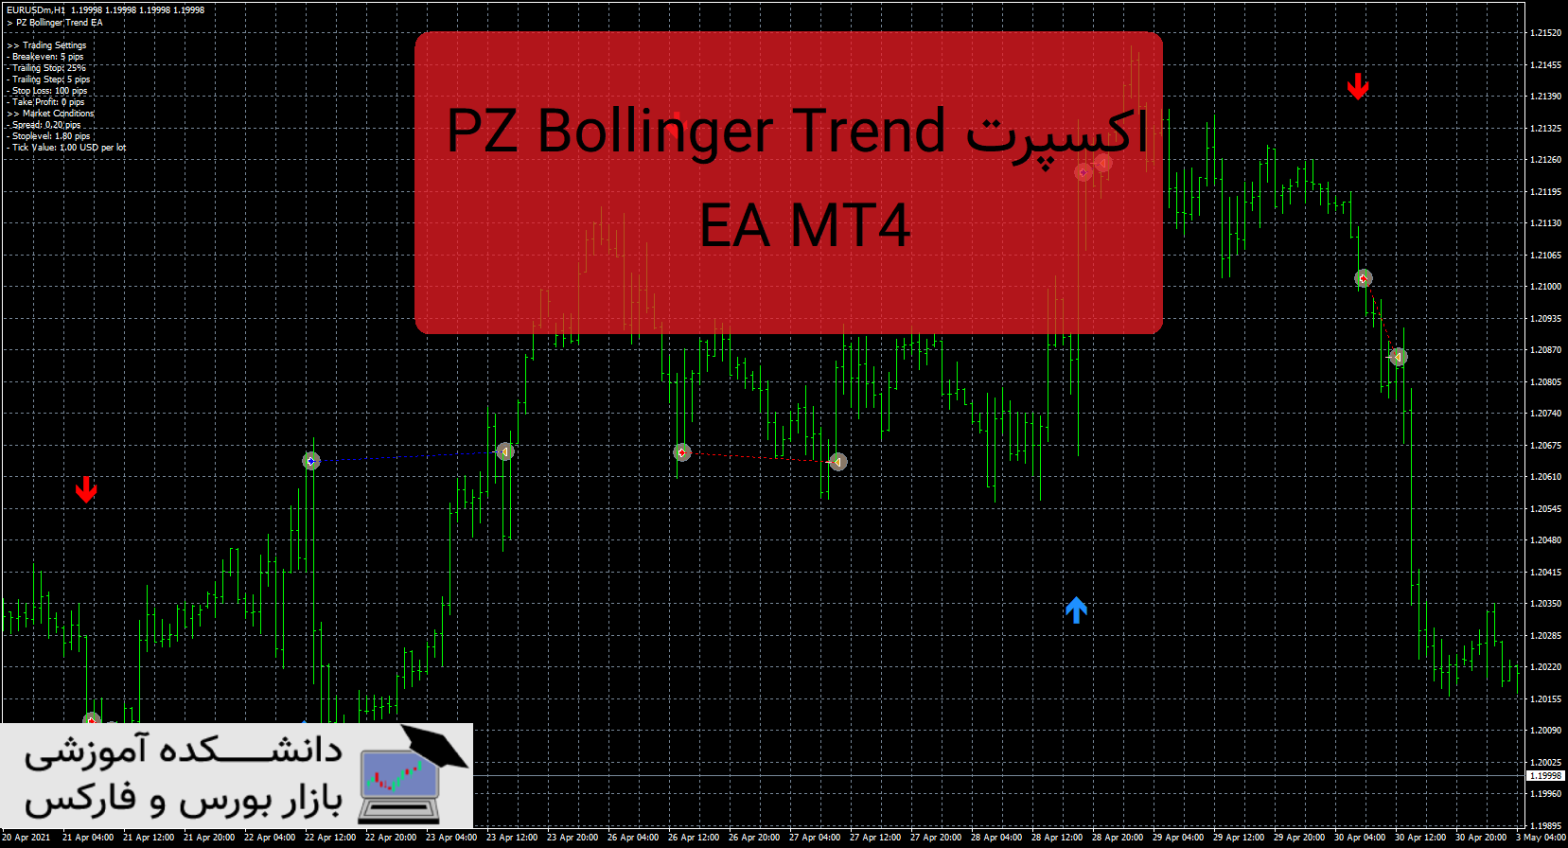 PZ Bollinger Trend EA MT4 دانلود و معرفی اکسپرت